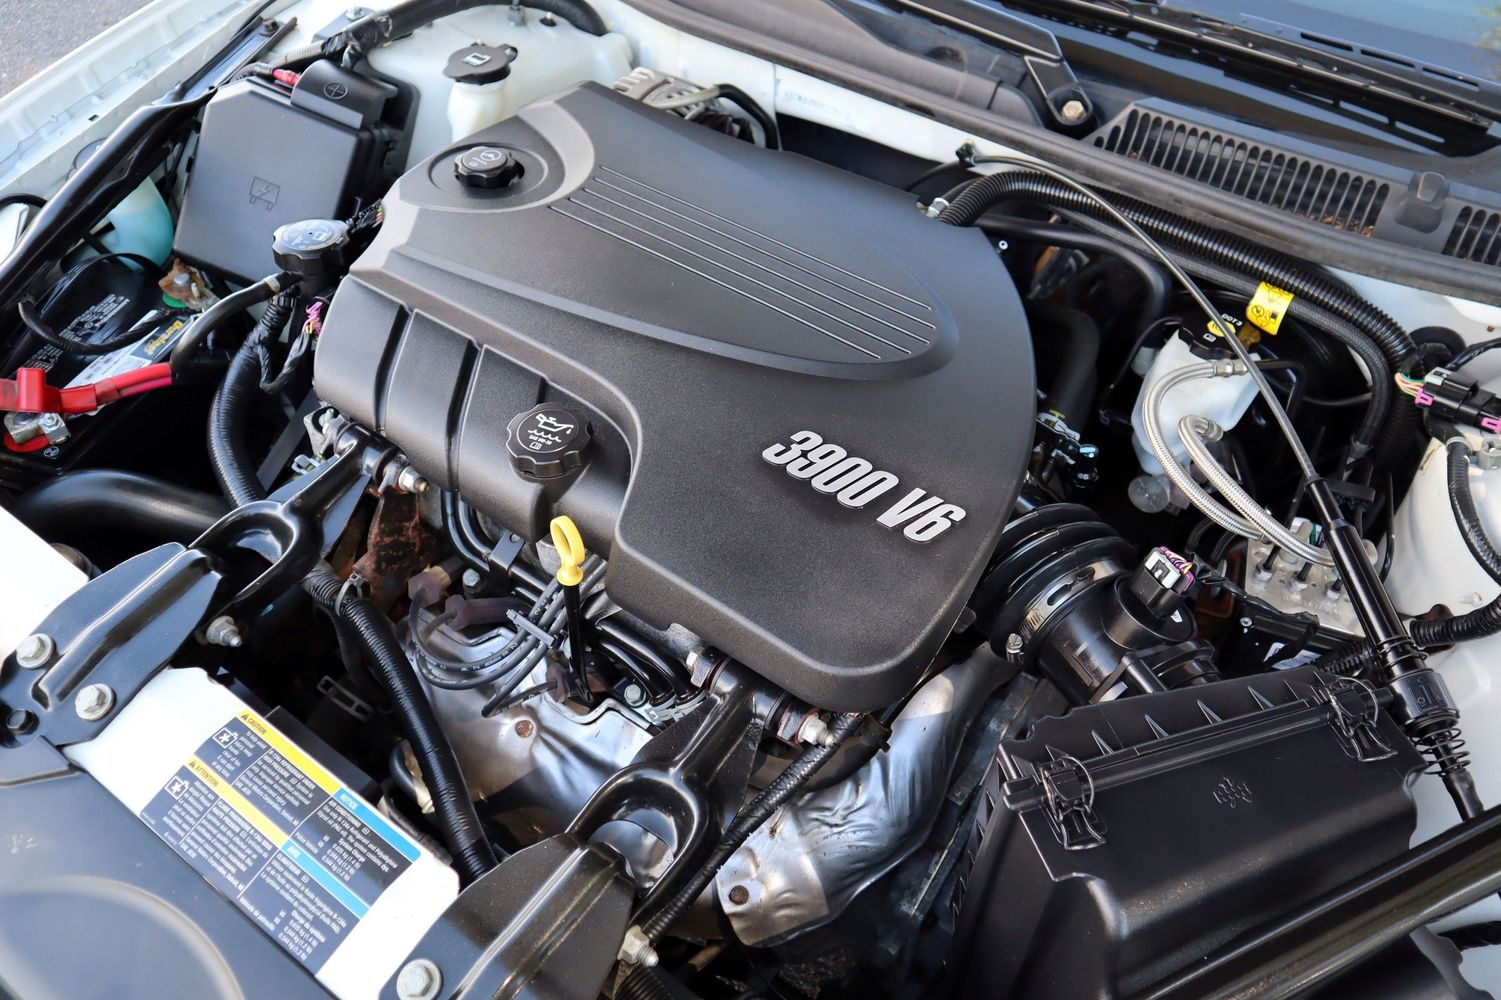 2009 Chevrolet Impala LTZ | Victory Motors of Colorado 2009 Chevrolet Impala Engine 3.9 L V6